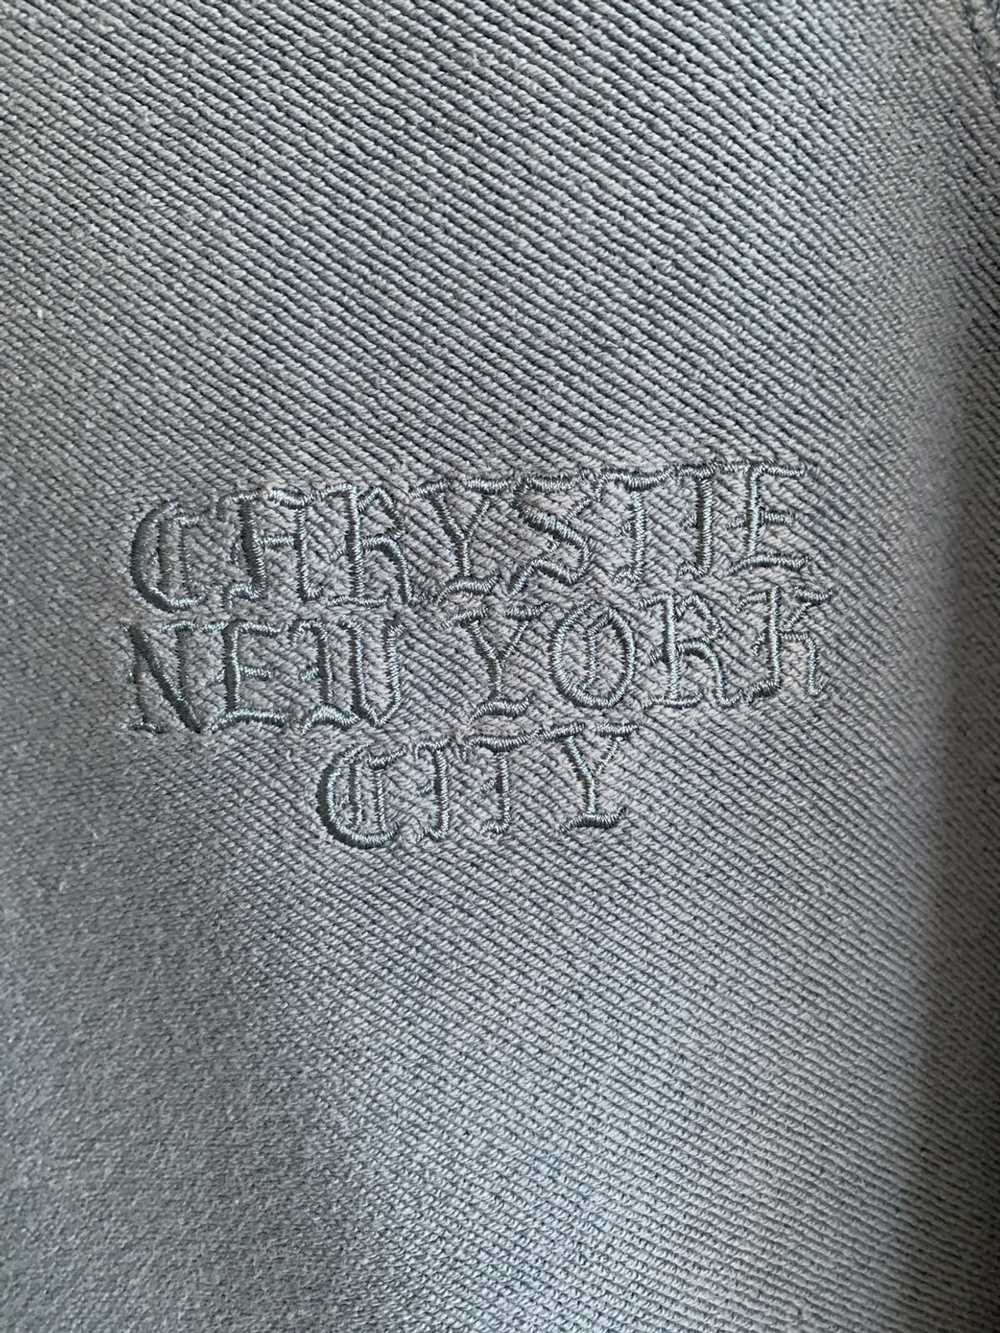 Streetwear Chrystie New York Sweatshirt - image 3